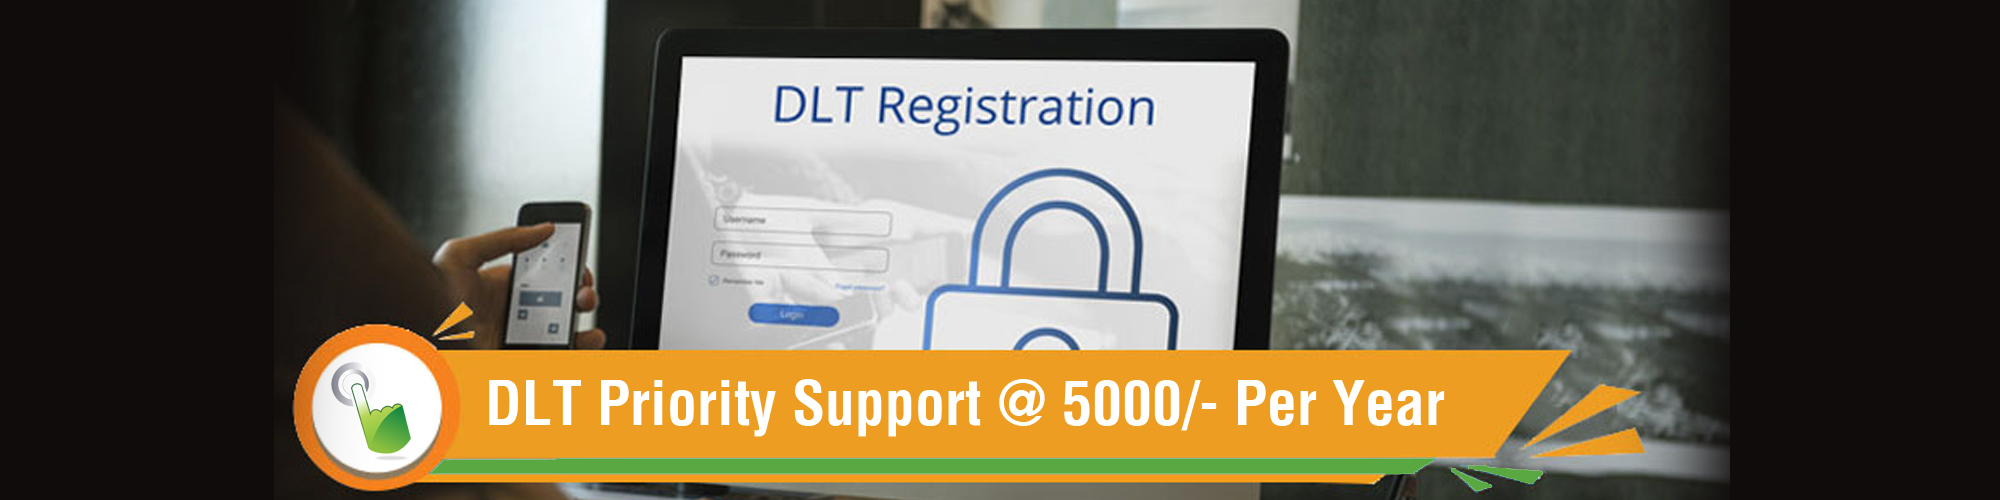 DLT Priority Support